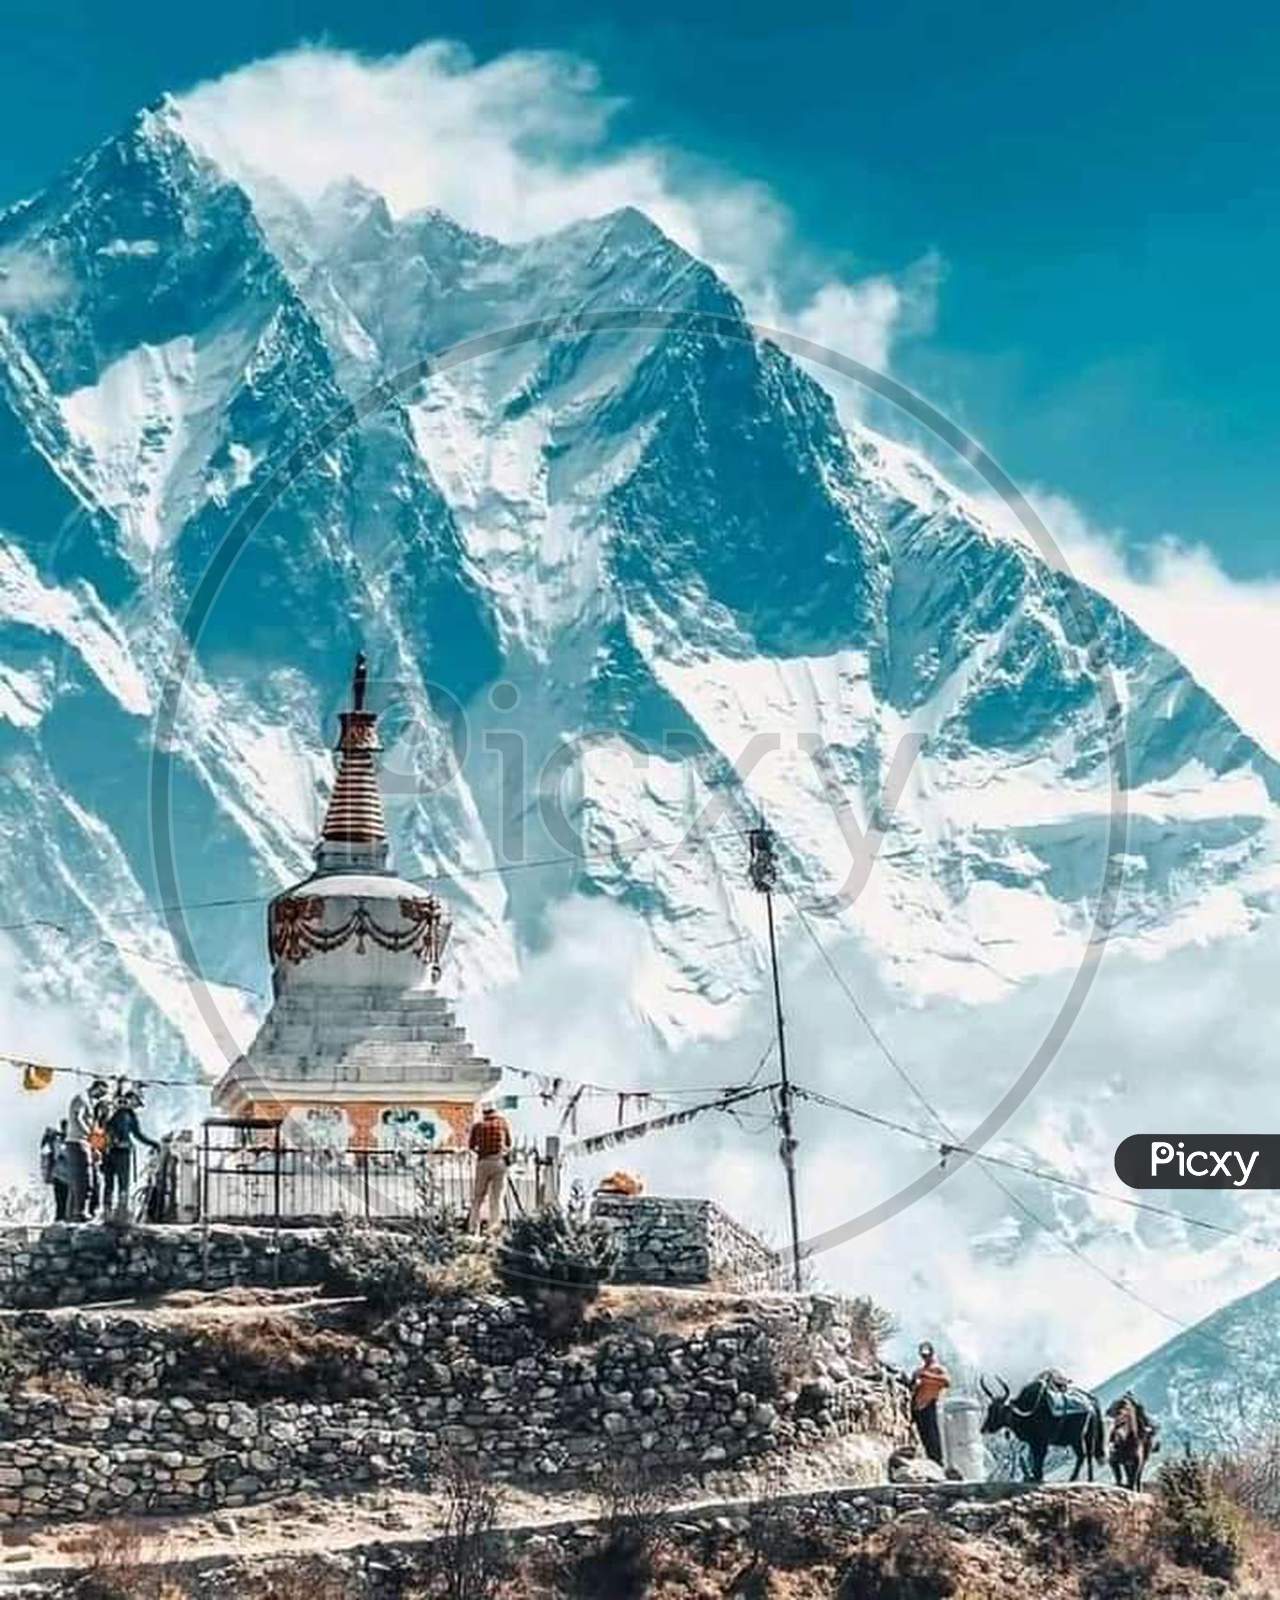 Himalayan region live mountain